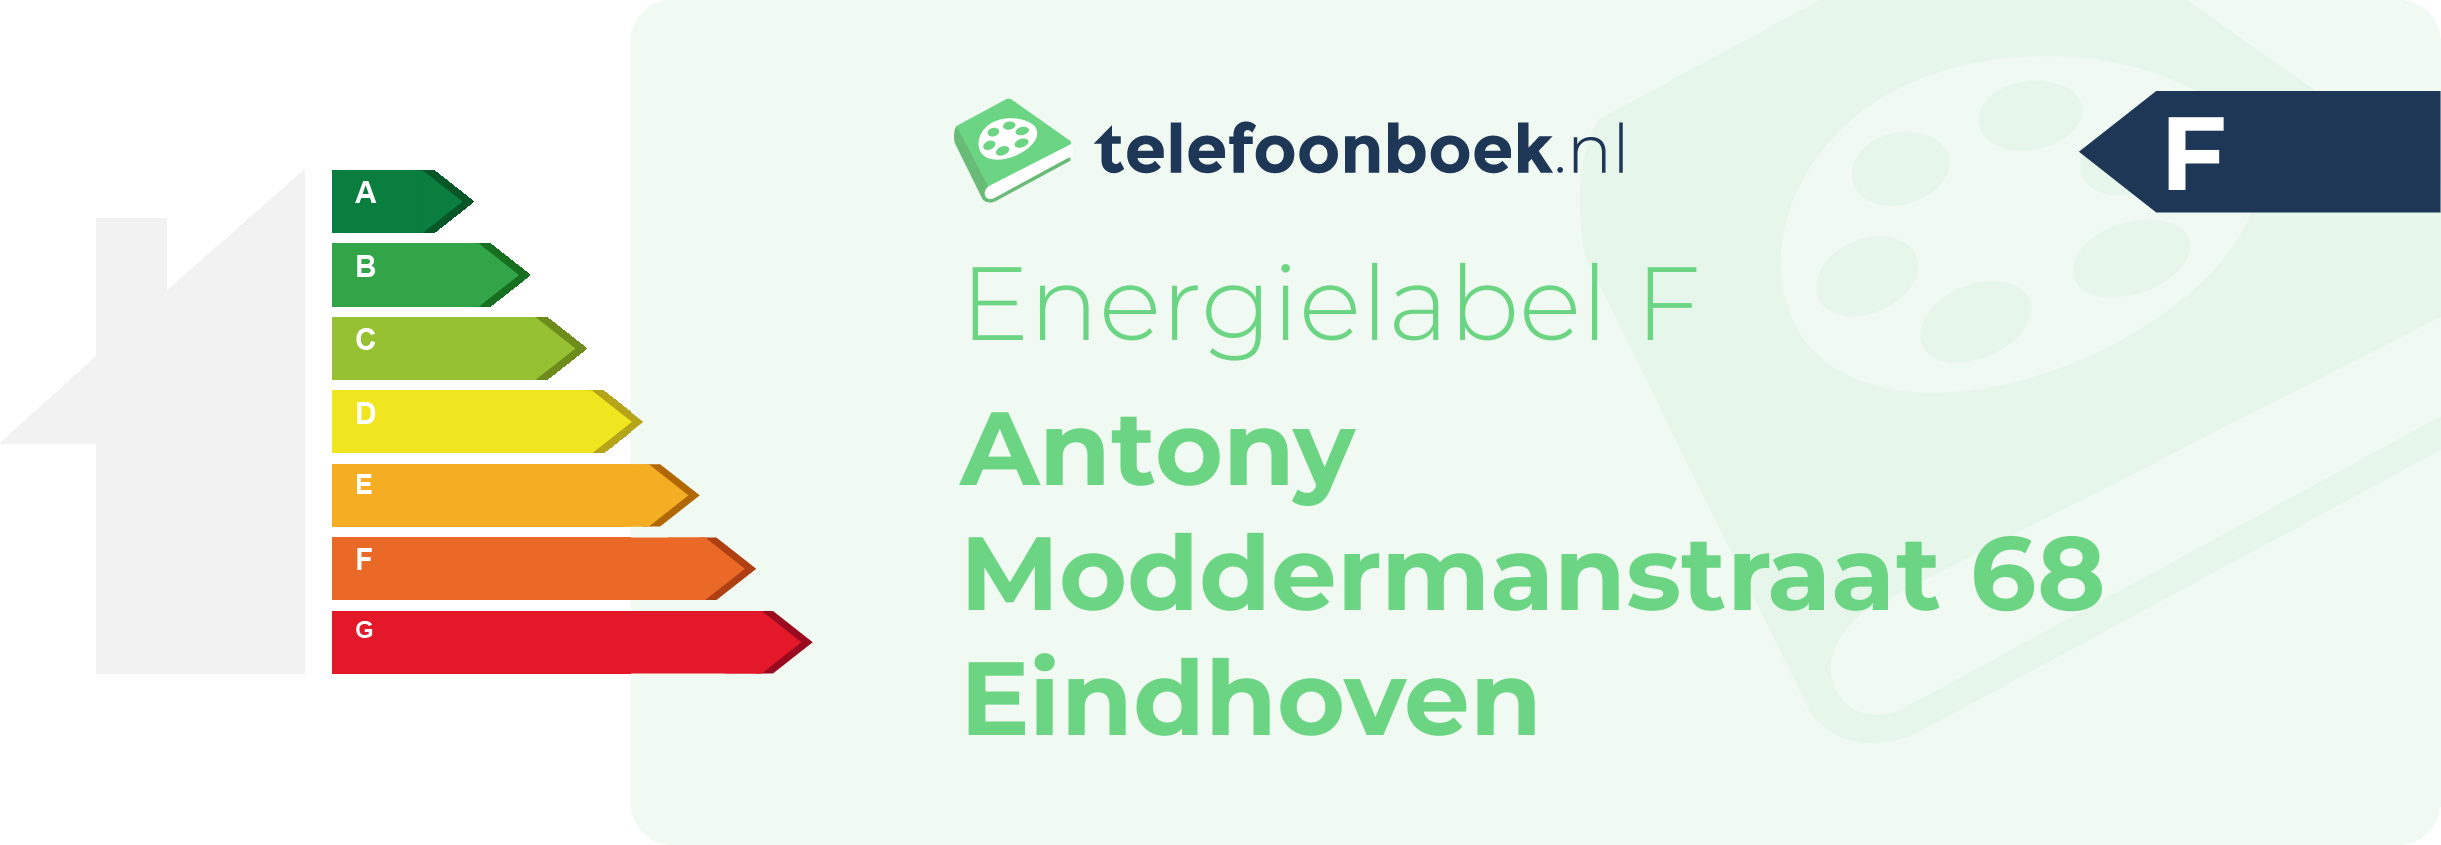 Energielabel Antony Moddermanstraat 68 Eindhoven